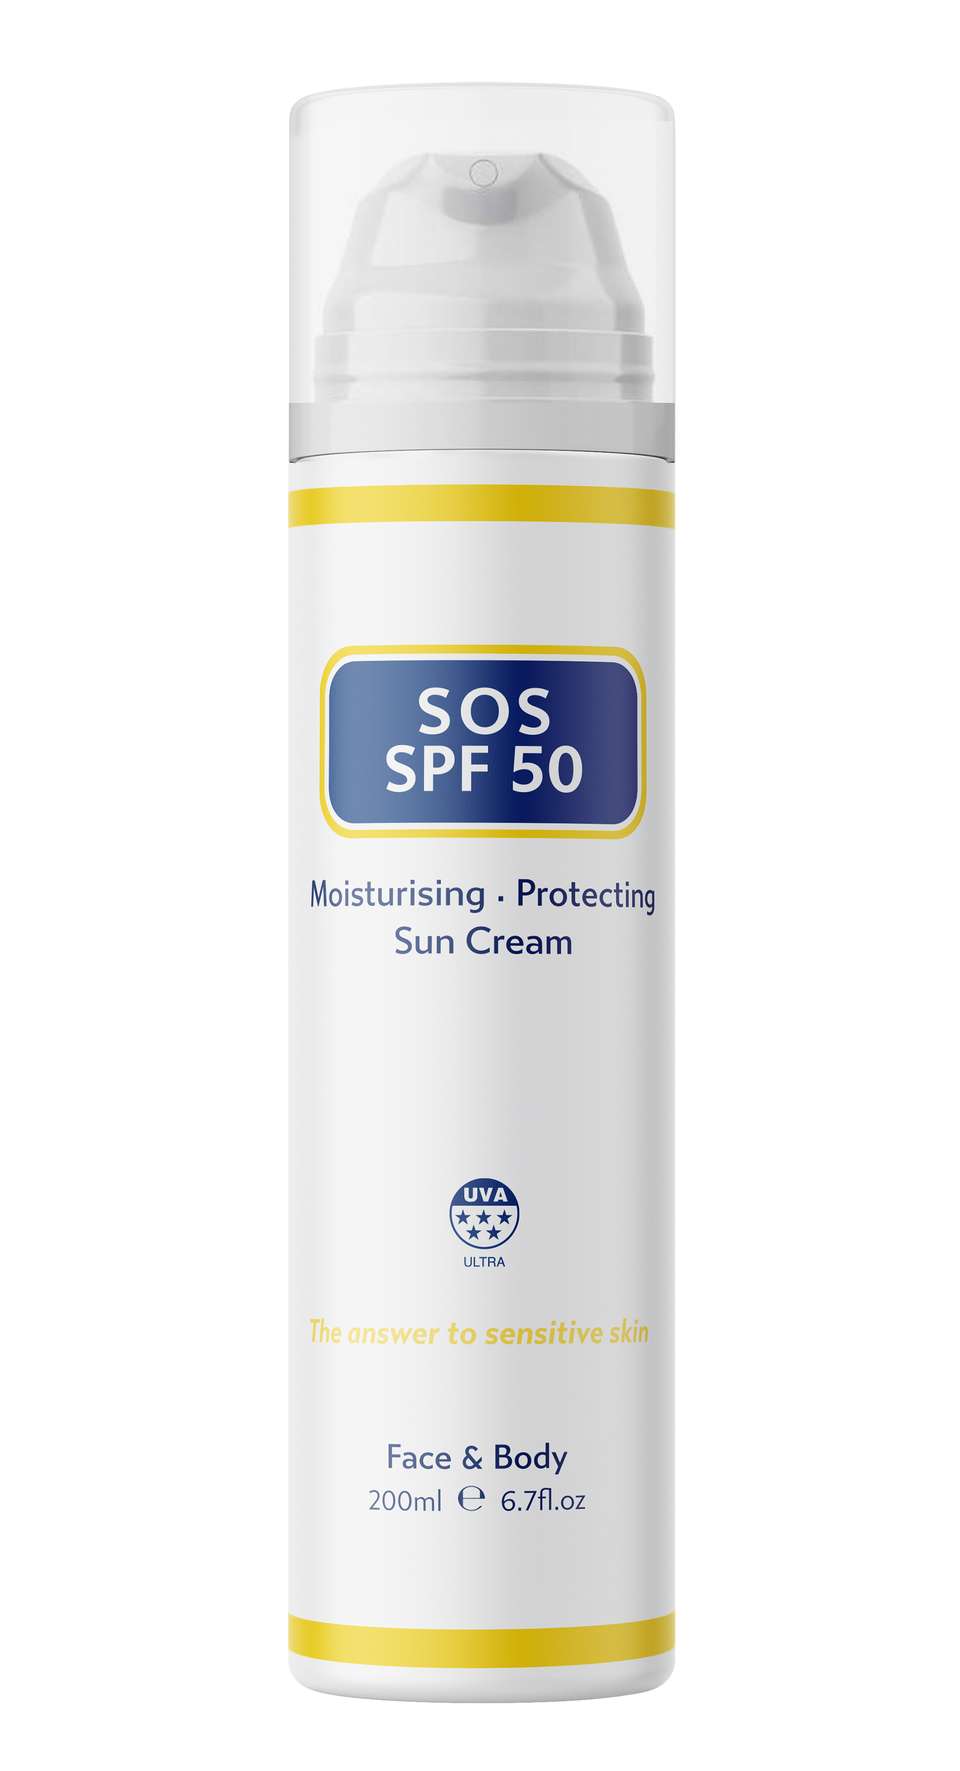 SOS SPF 50 Sun Cream, 200ml image